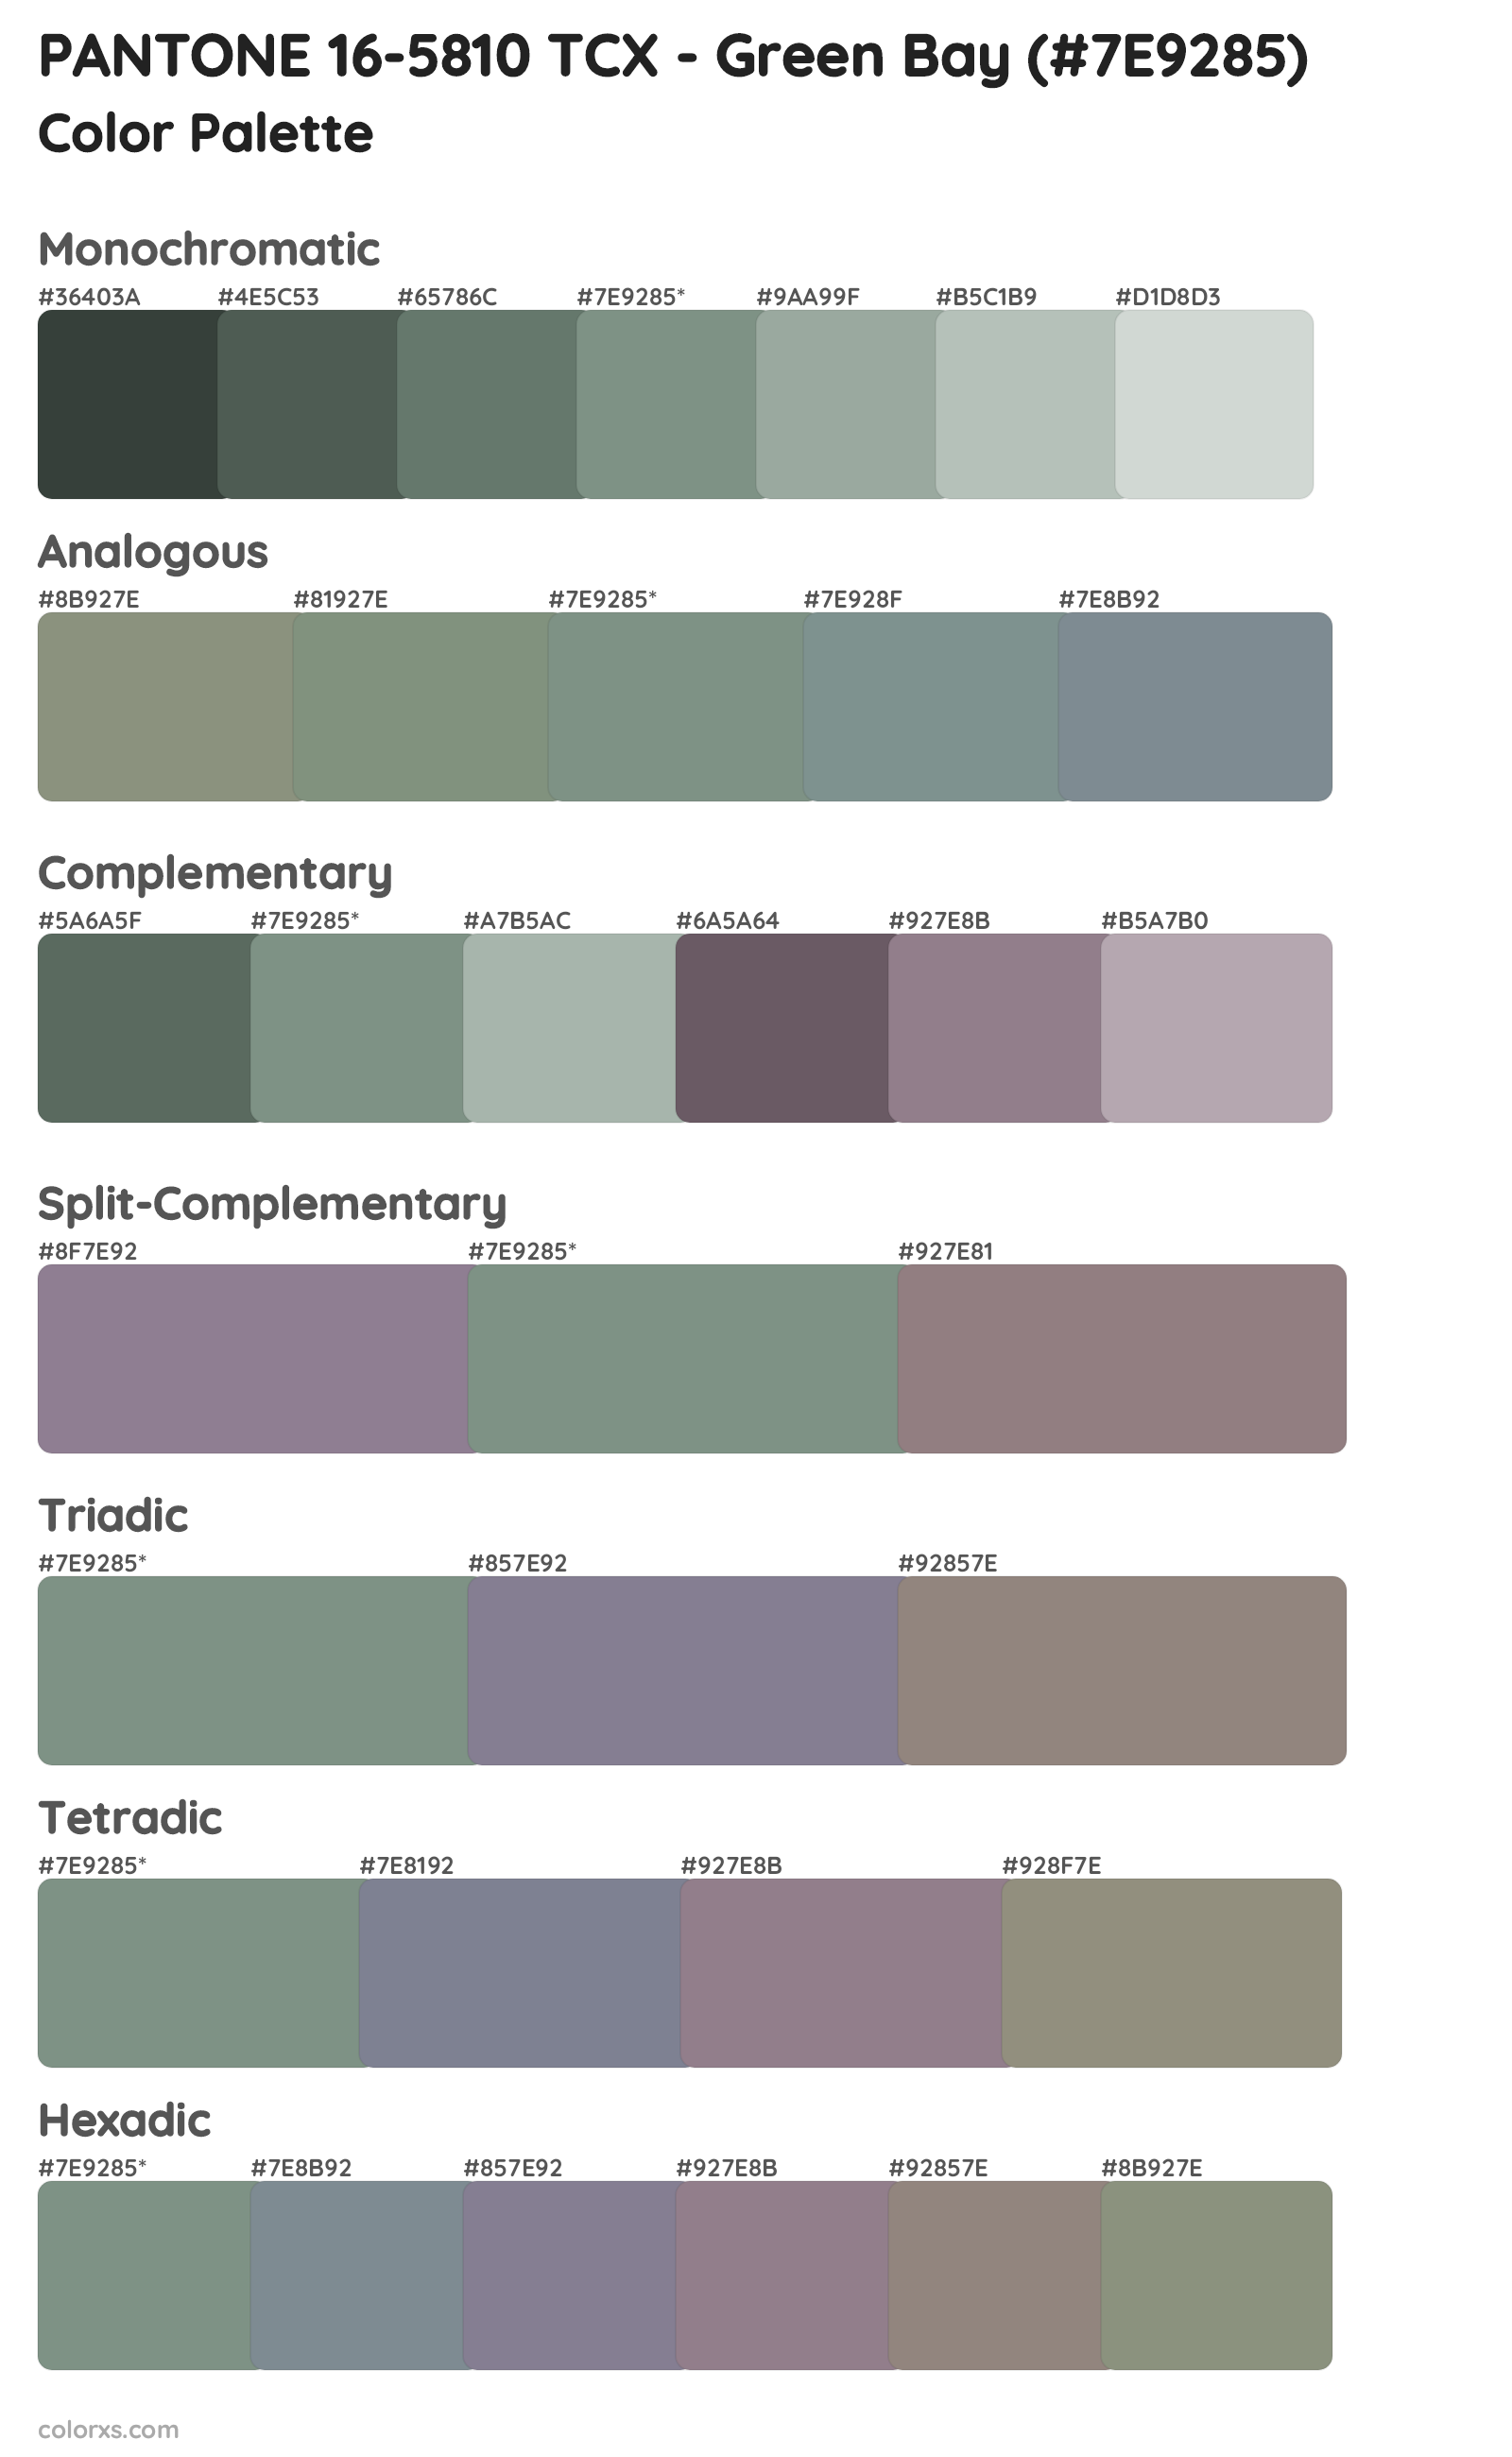 PANTONE 16-5810 TCX - Green Bay Color Scheme Palettes